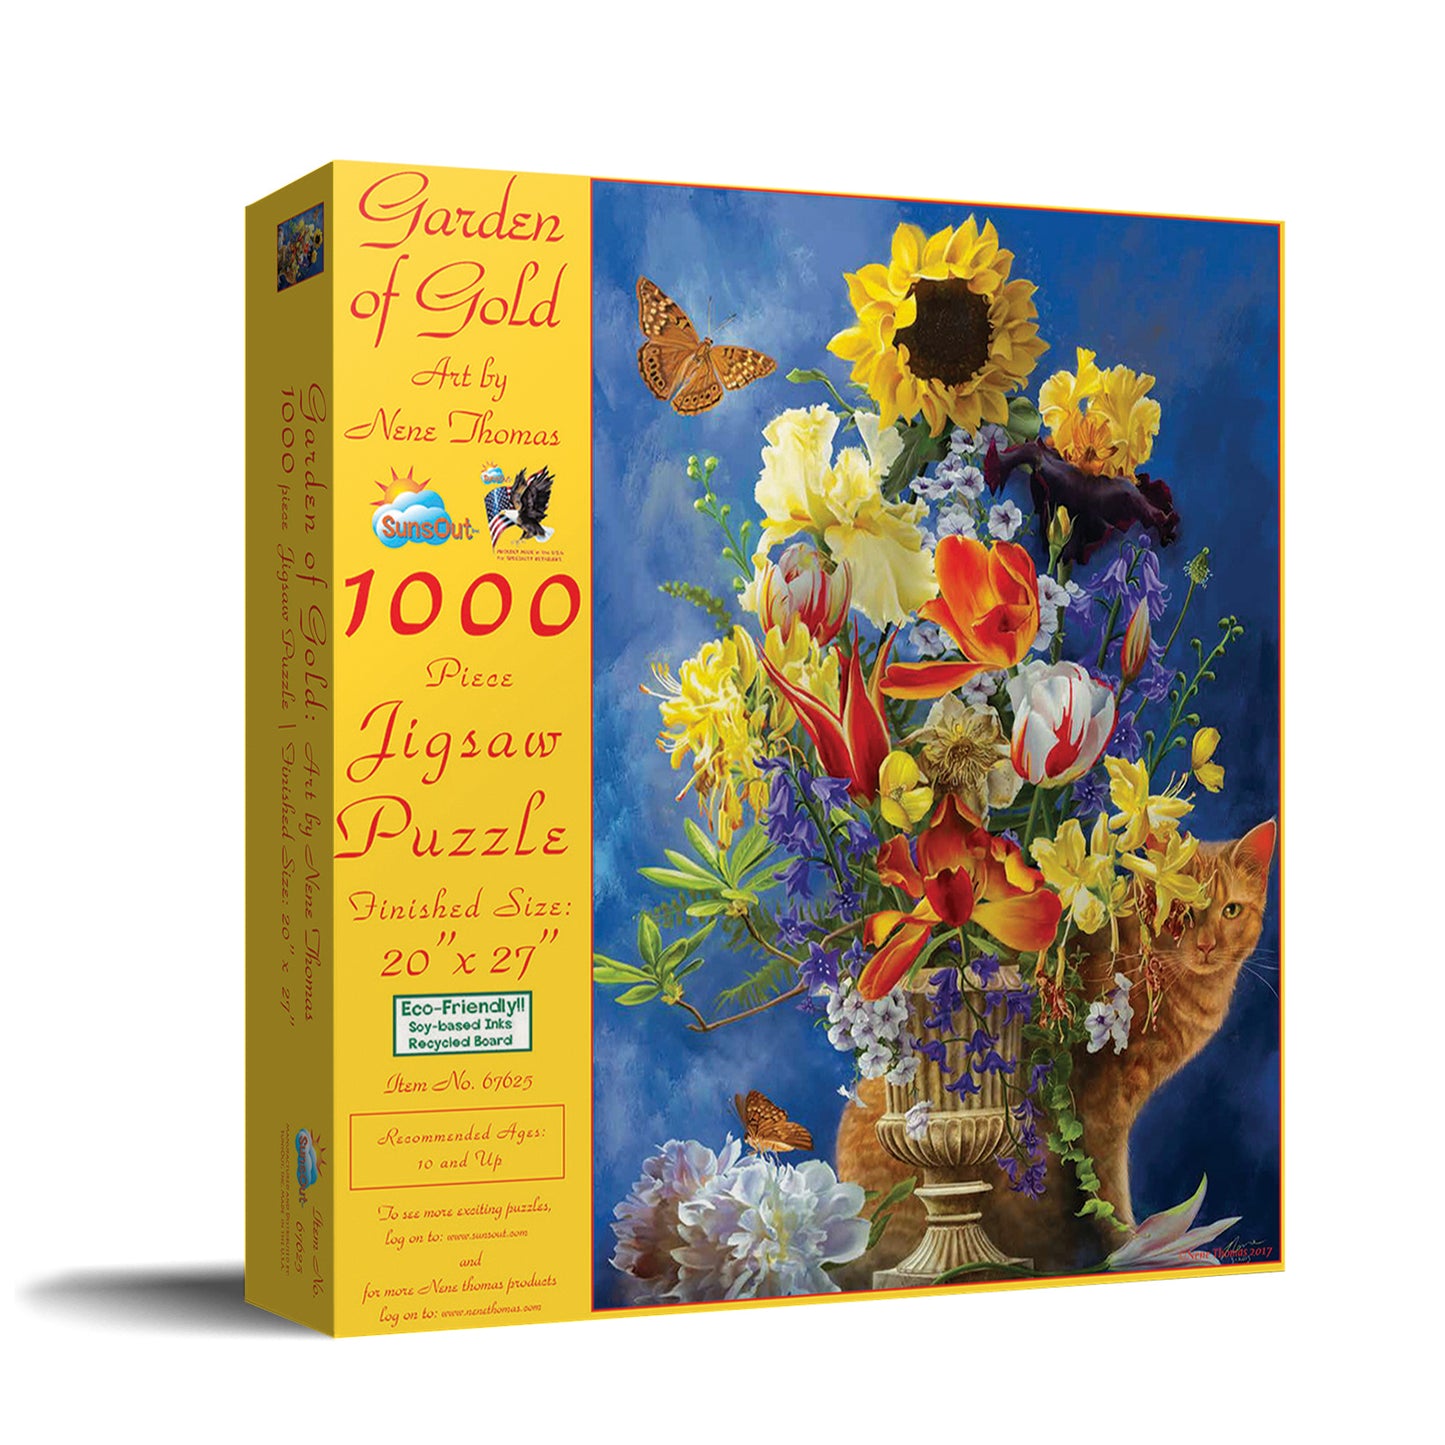 Garden of Gold - 1000 Piece Jigsaw Puzzle